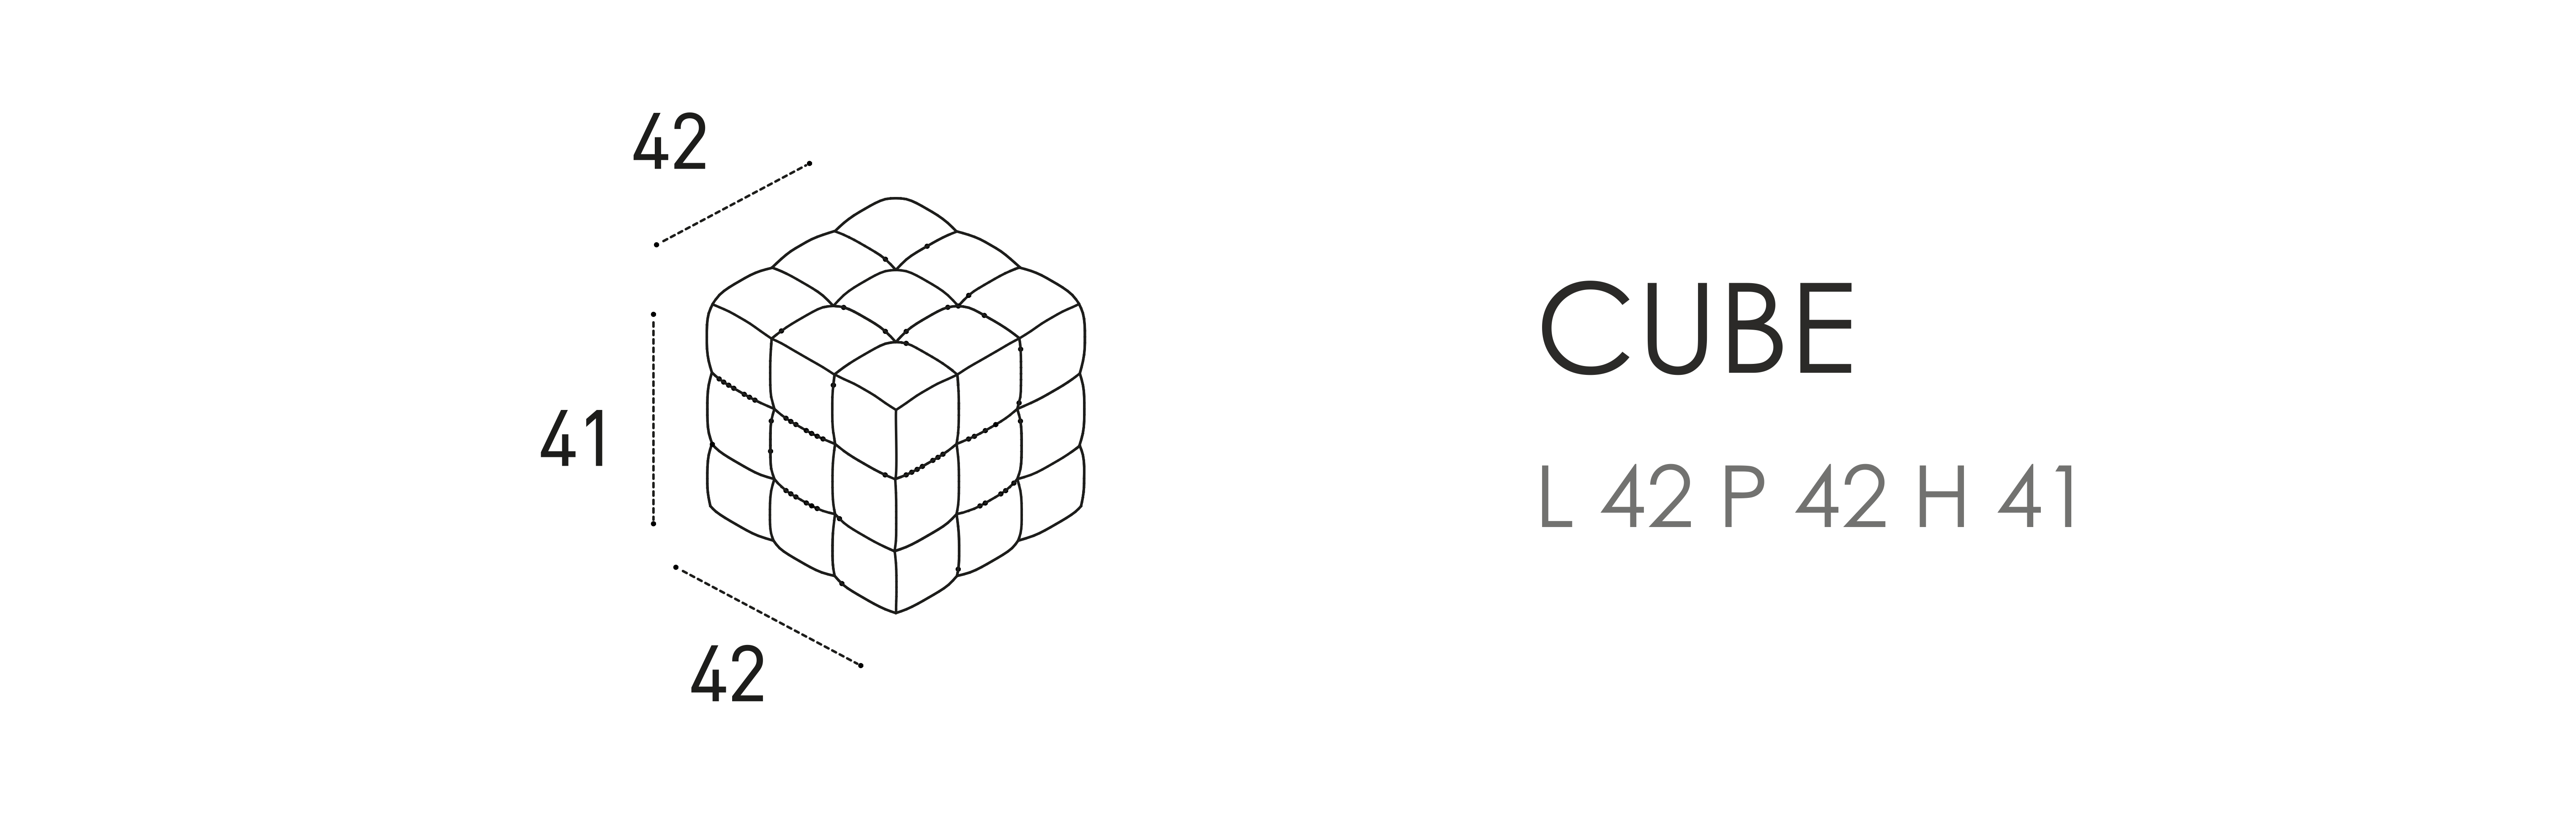 Cube L 42 P 42 H 41